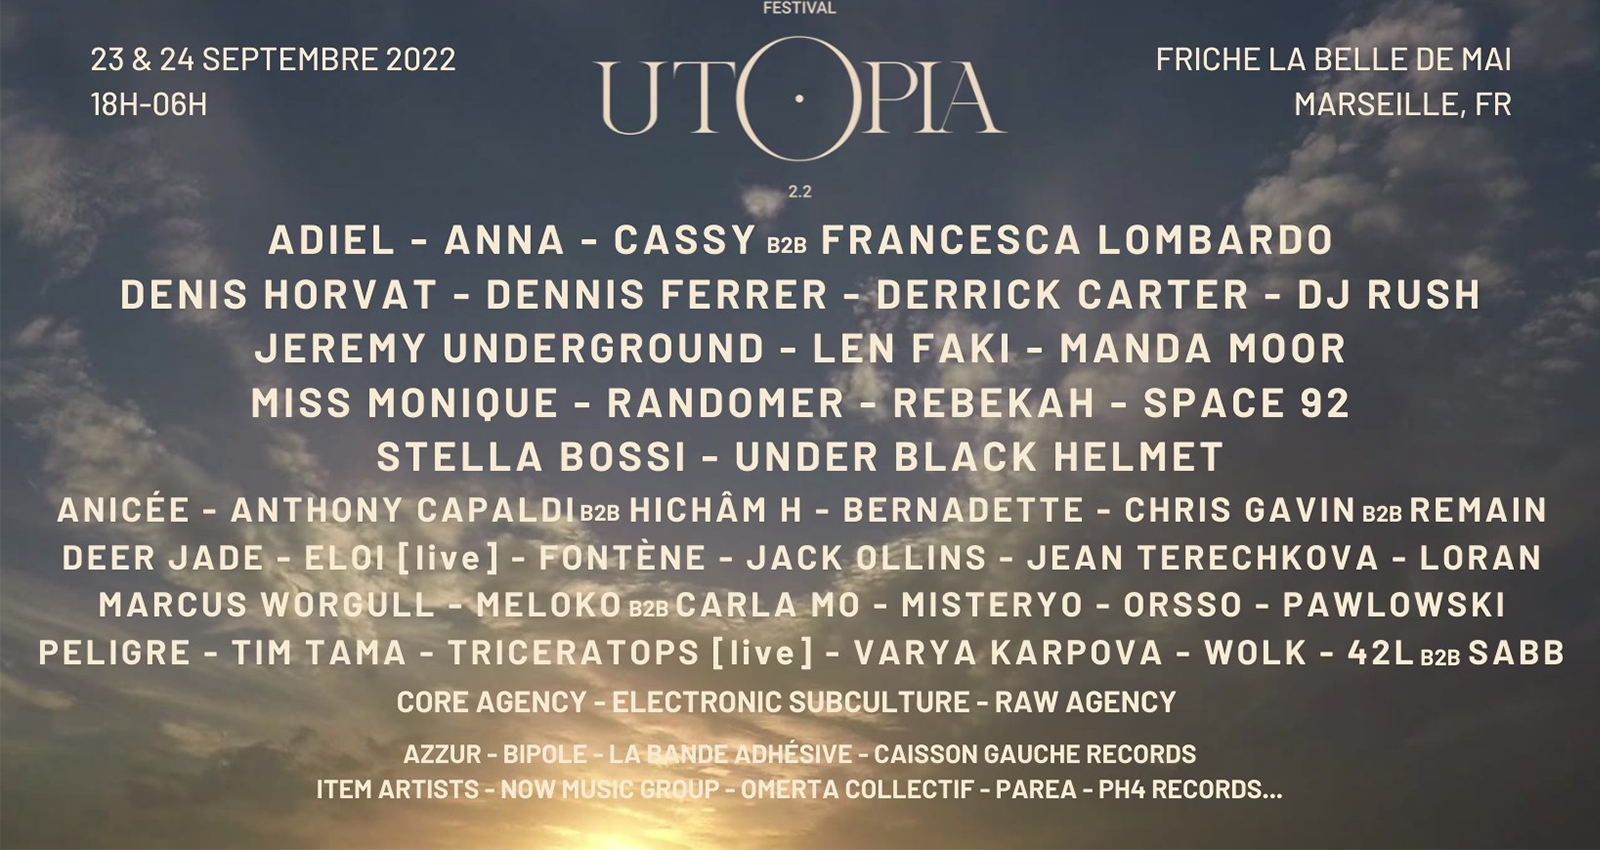 Programmation de l'Utopia Festival 2022